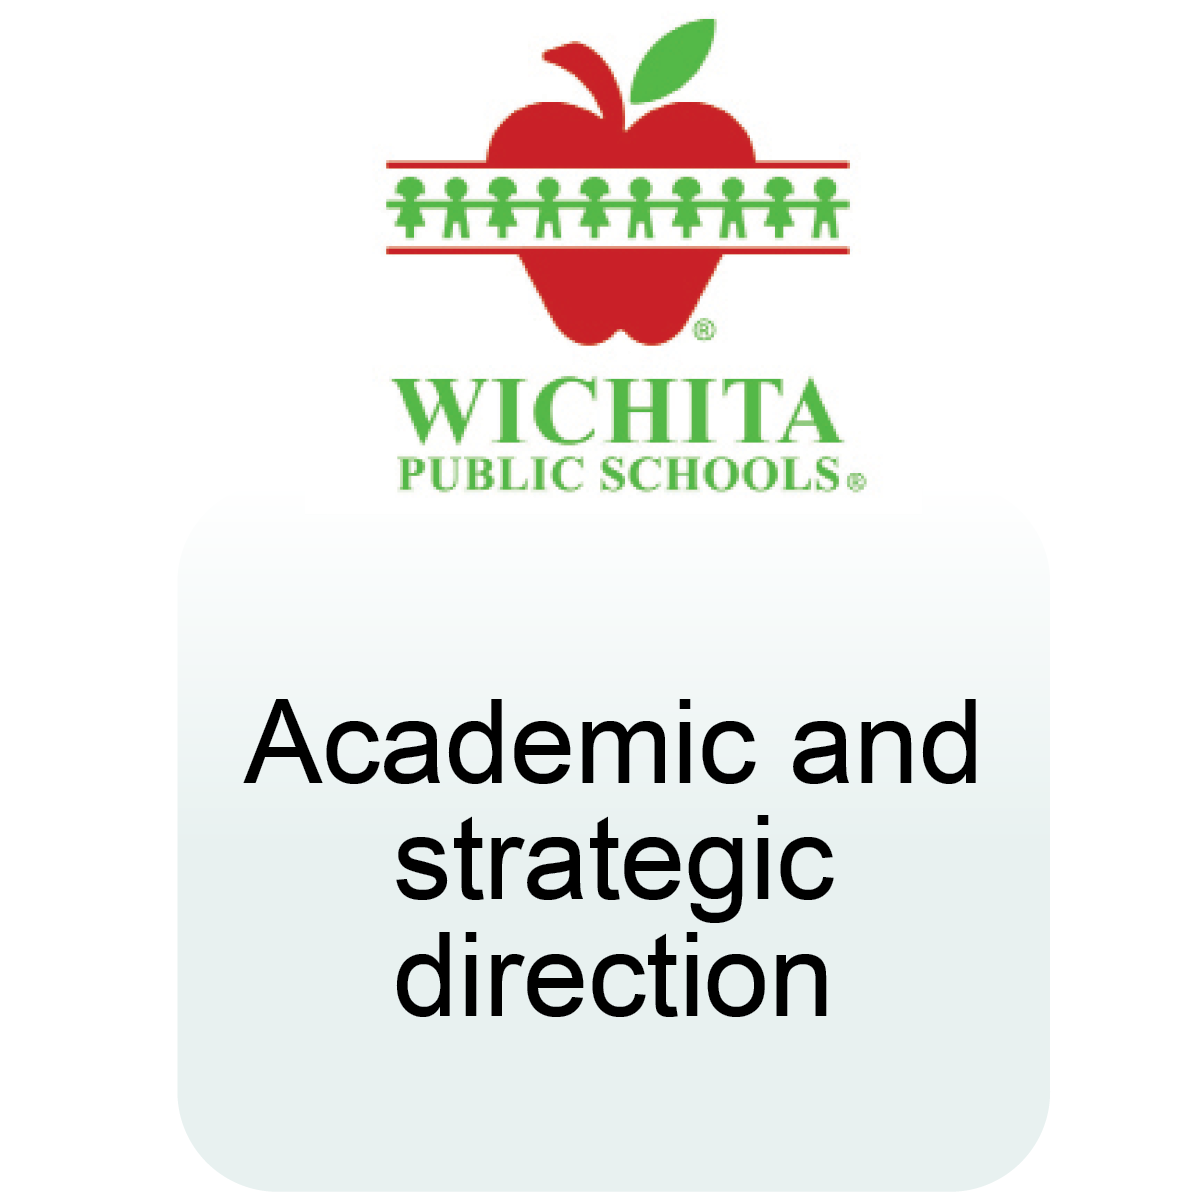 Wichita public schools, academic and strategic direction